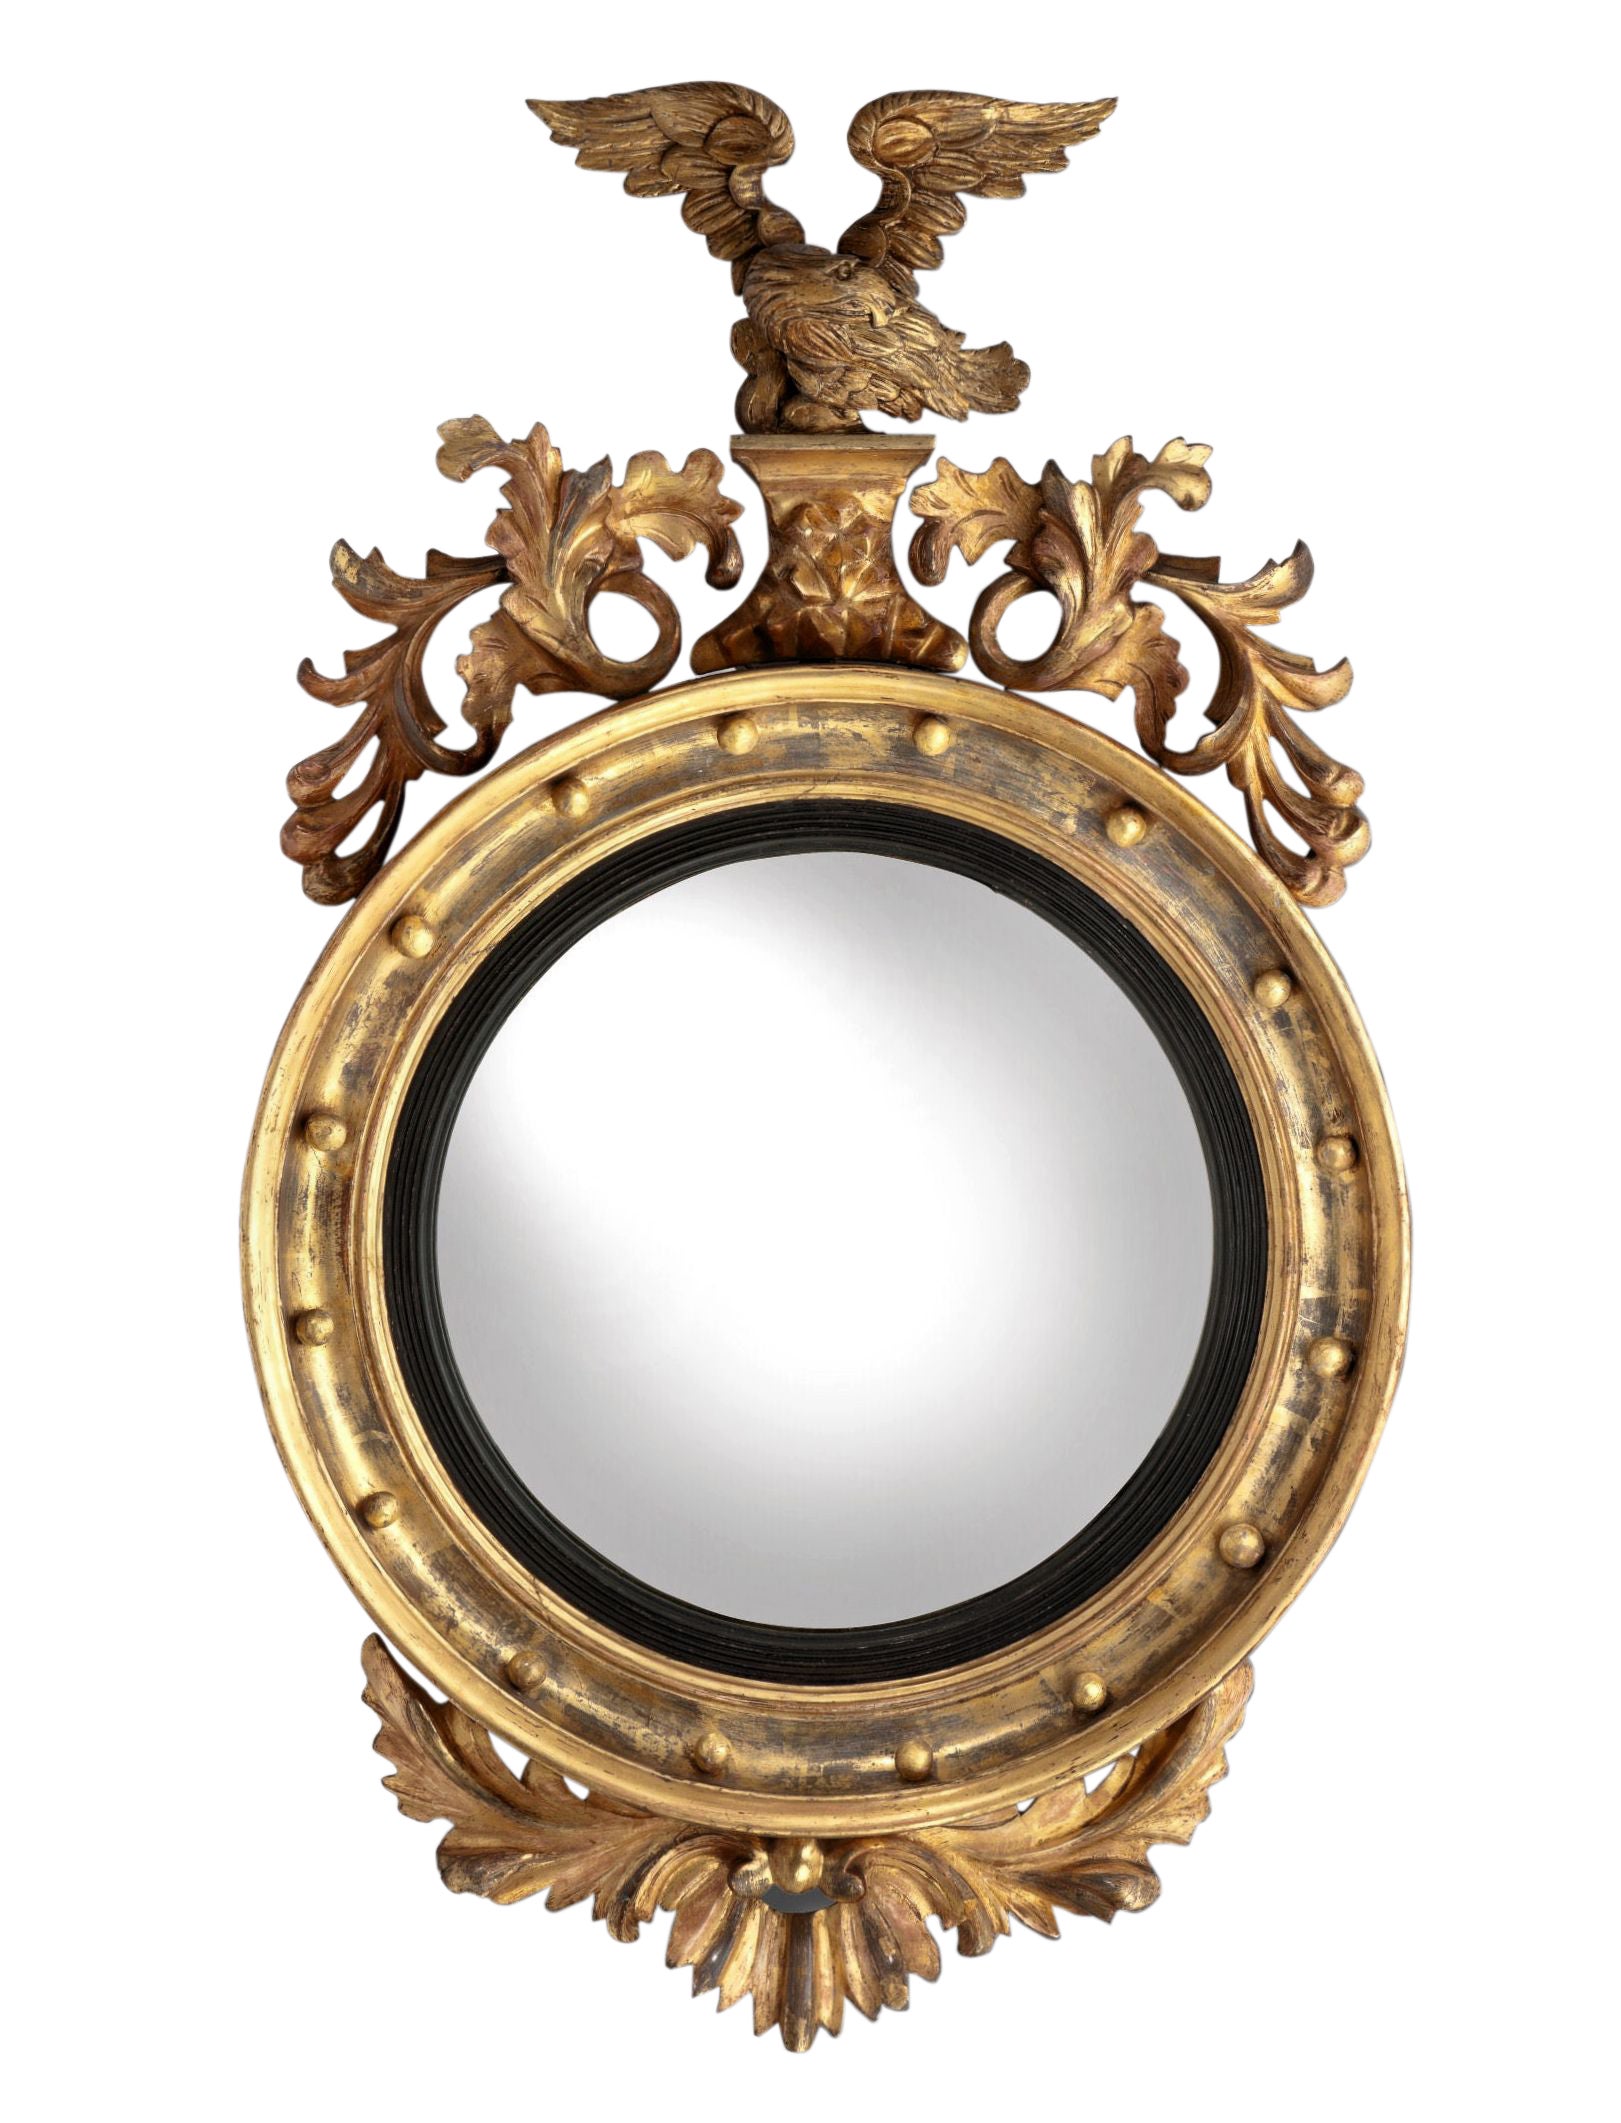 A Fine Early 19th Century Convex Mirror